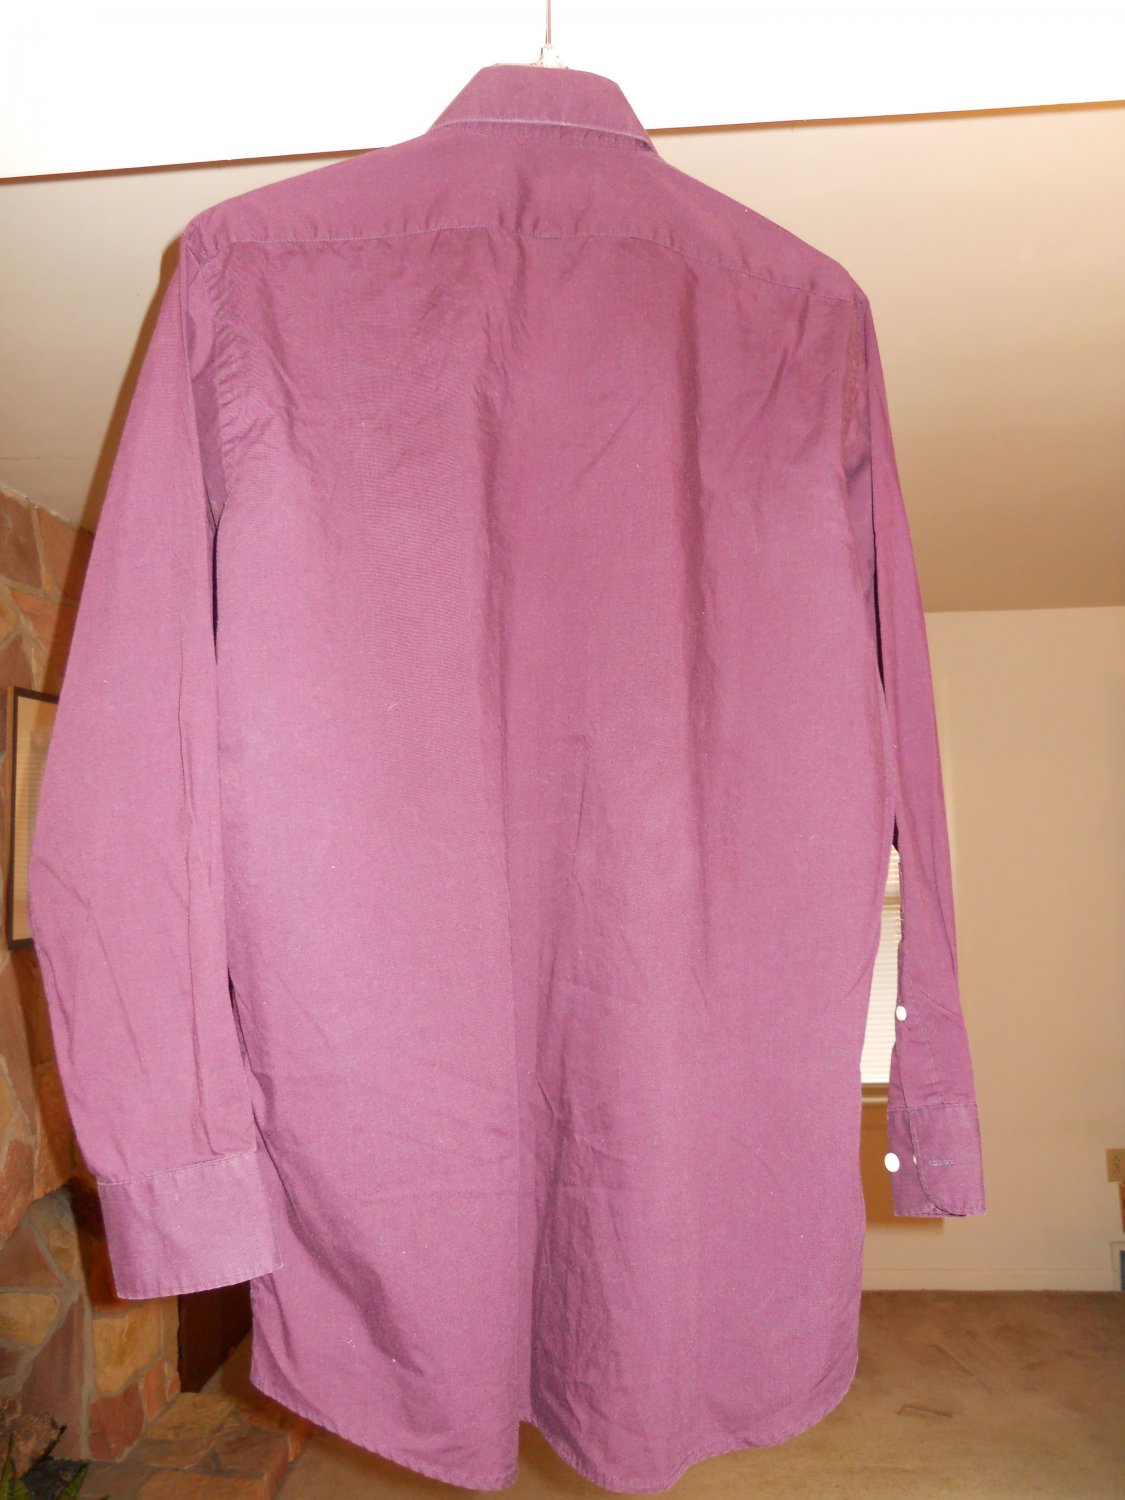 Oleg Cassini men's dress shirt size 15 1/2 32/33 large long sleeve maroon